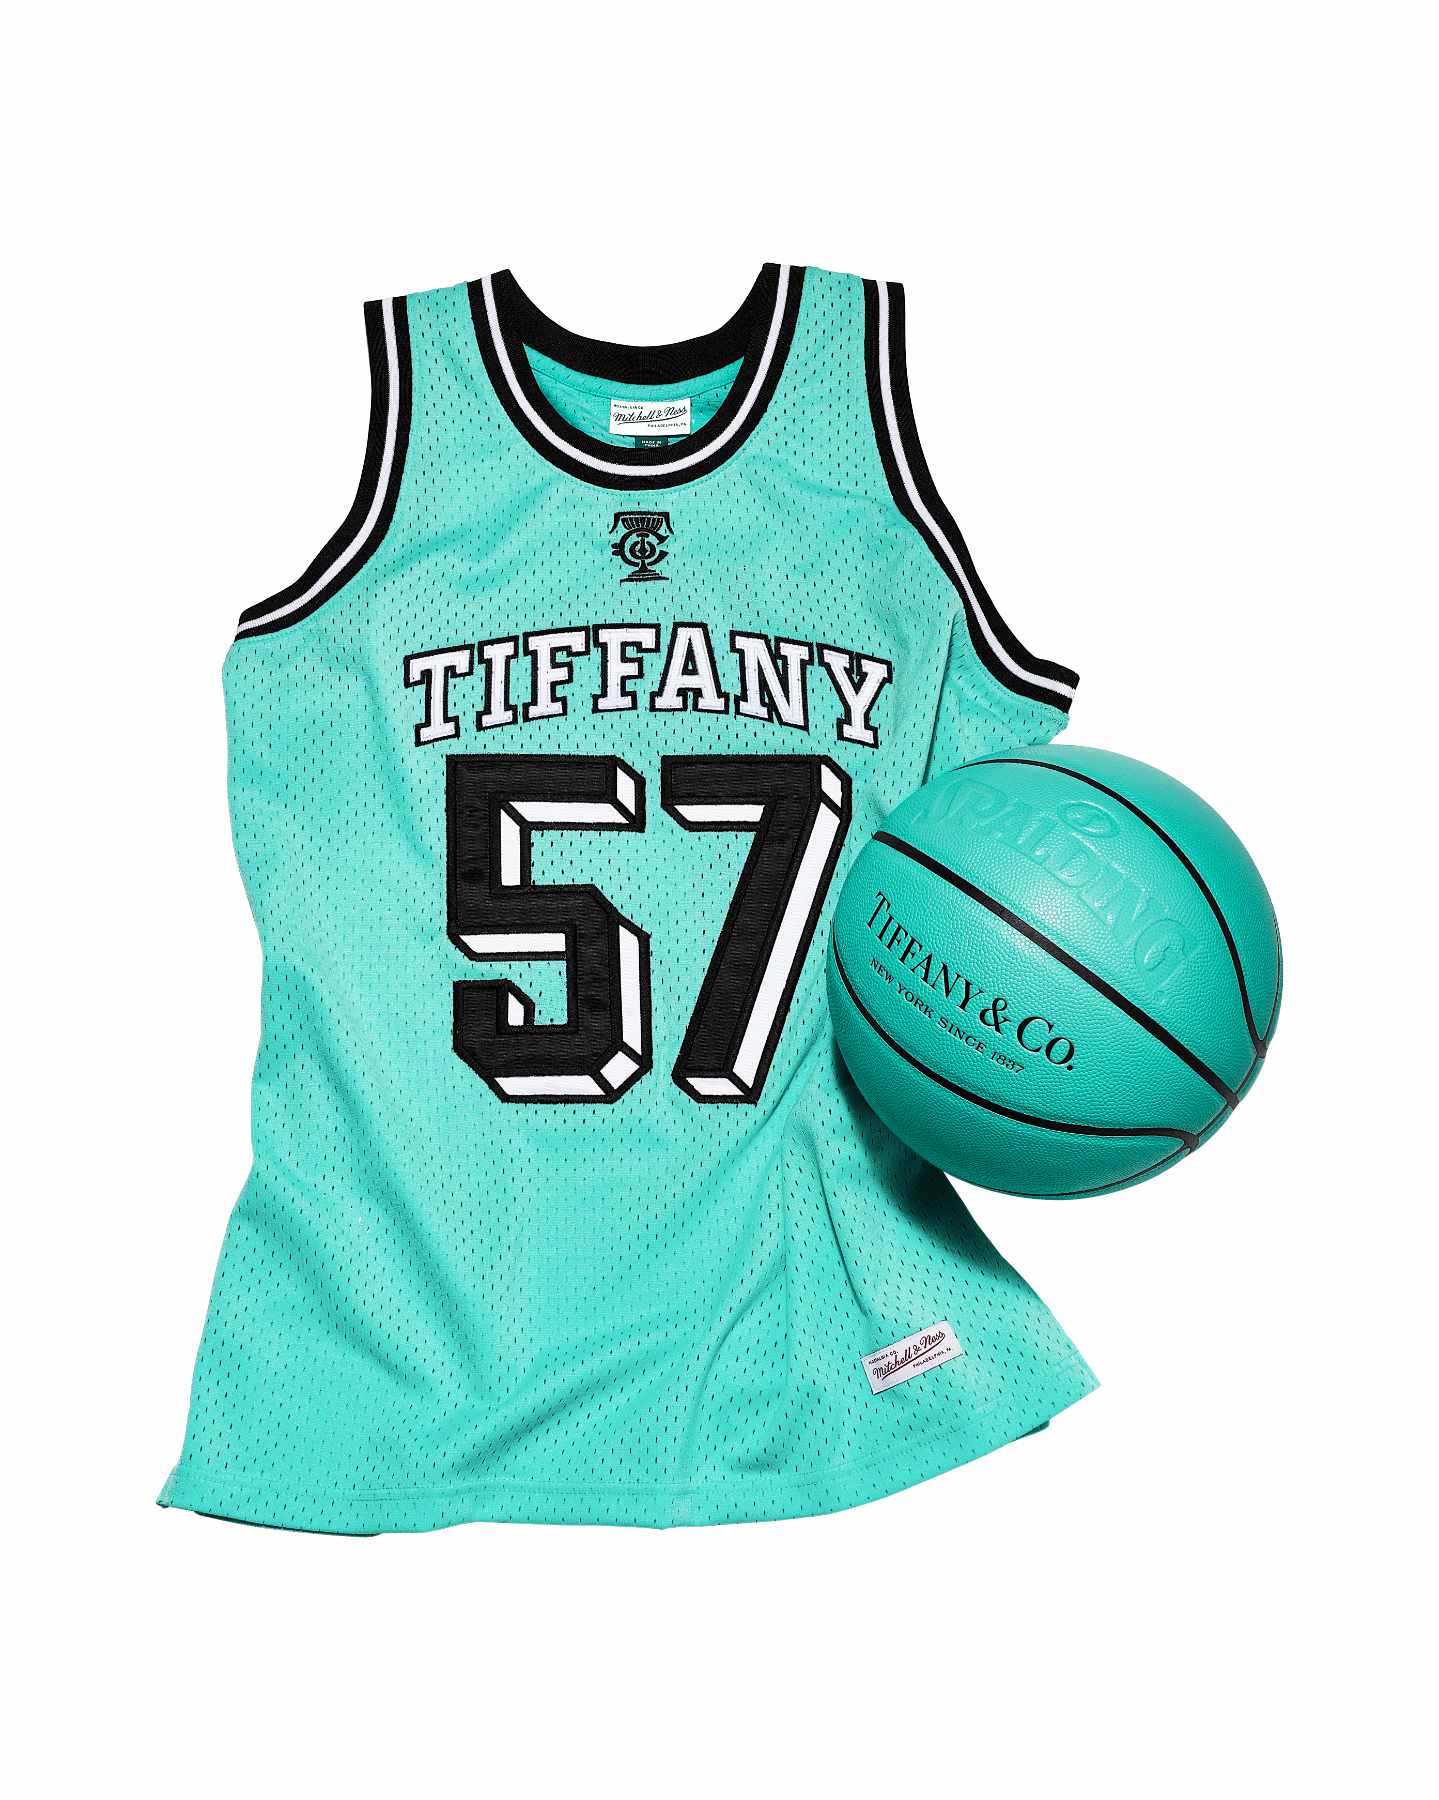 Tiffany & Co. x Spalding Basketball - US